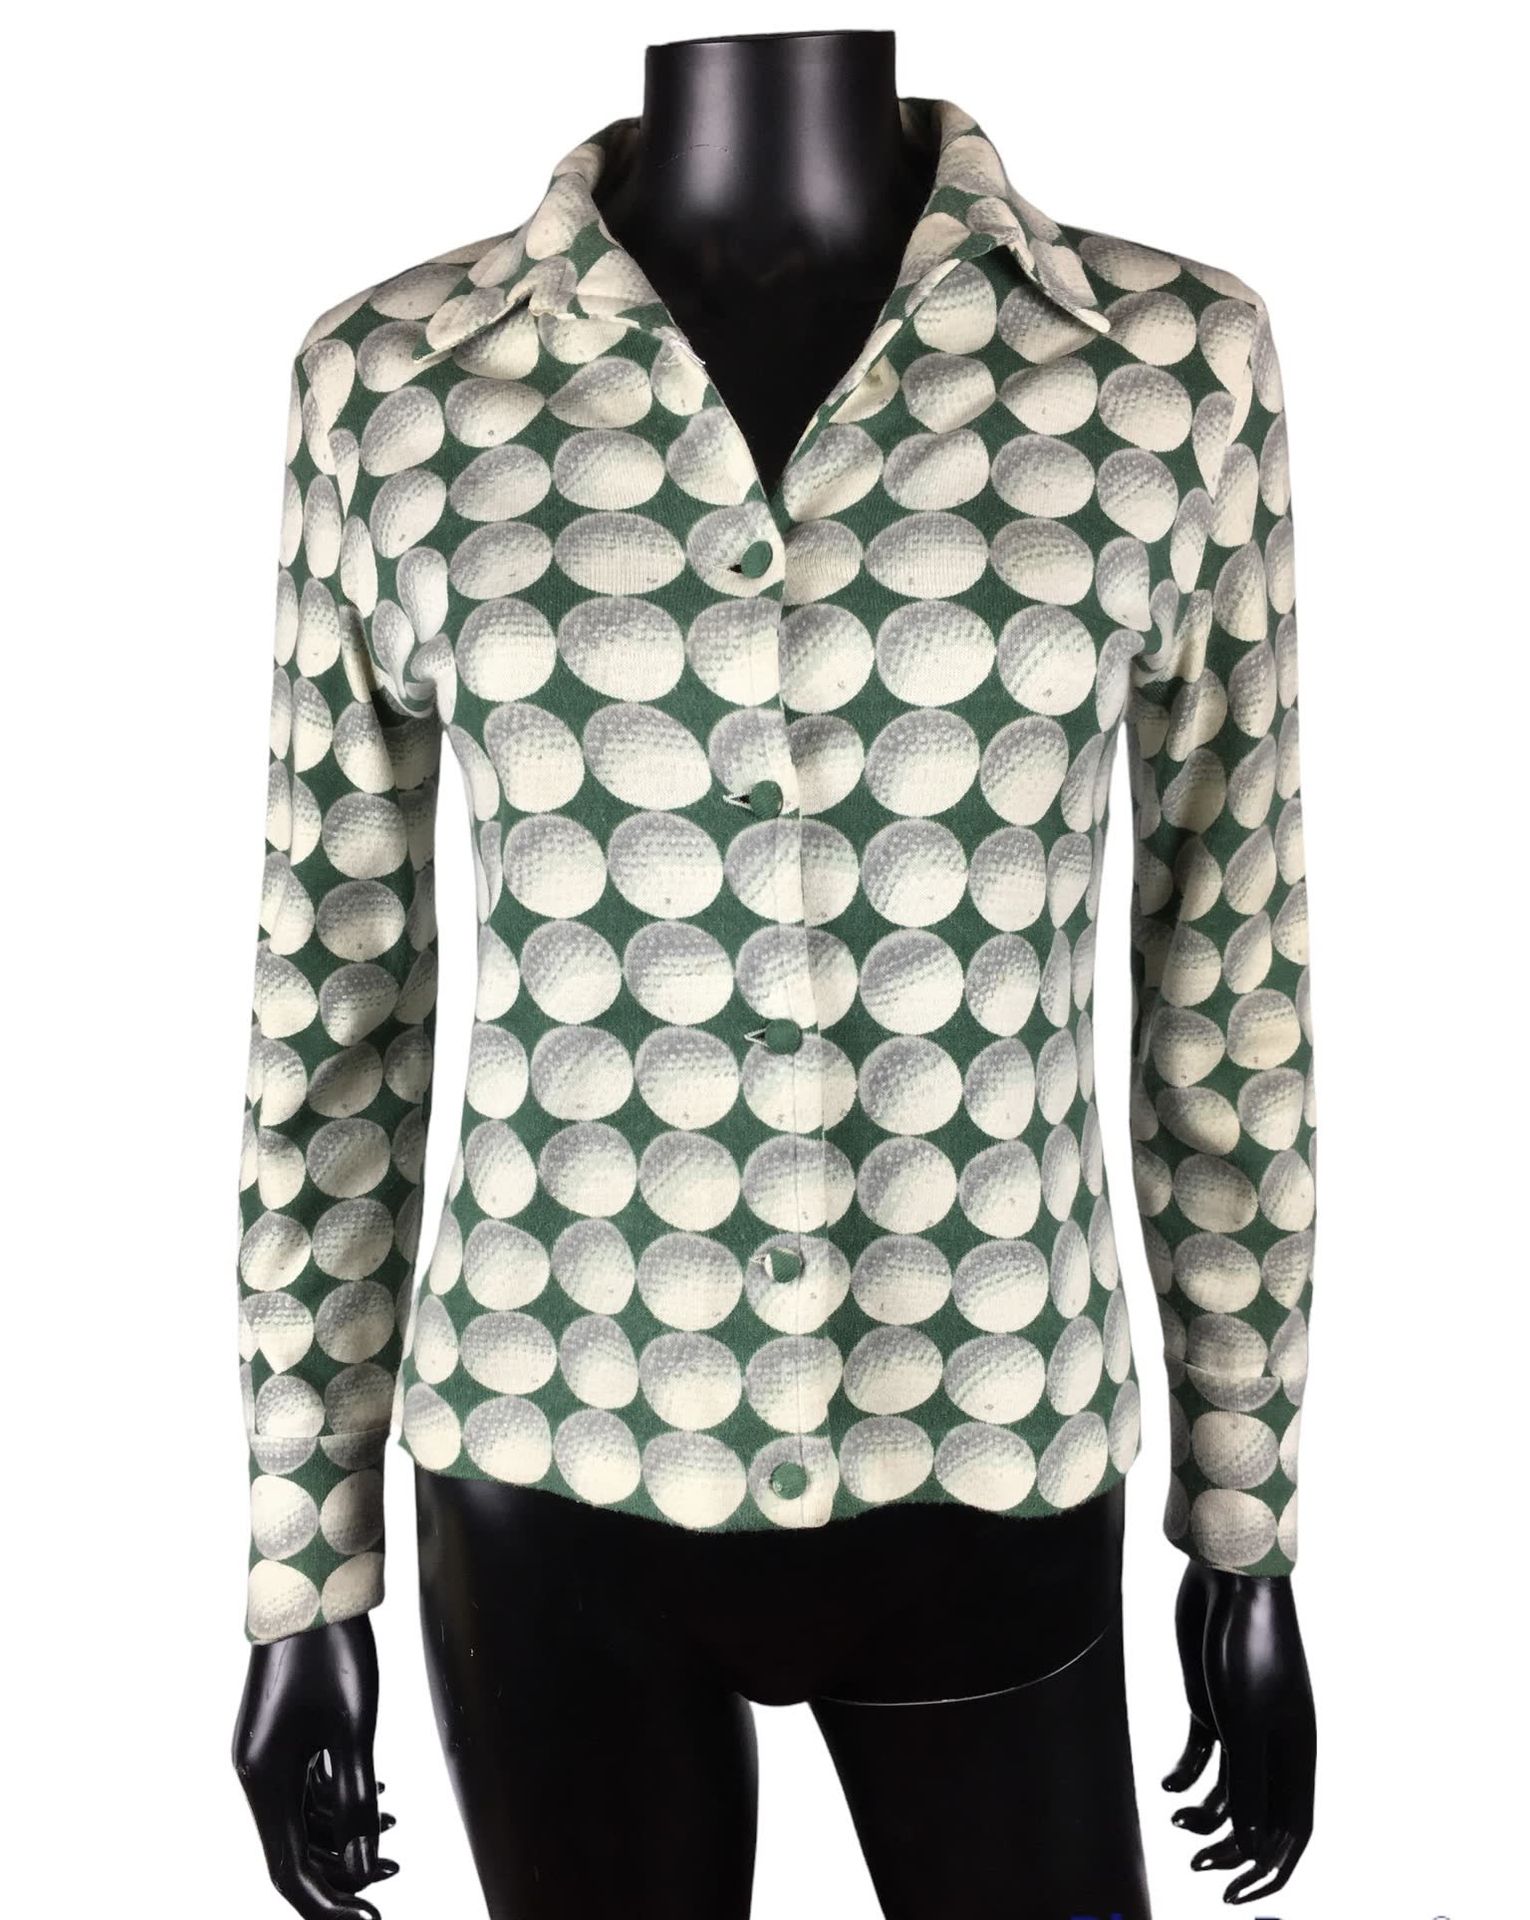 Null HERMES PARIS 羊毛开衫，绿色背景上有高尔夫球。 尺寸36。 状况良好，有小污点。